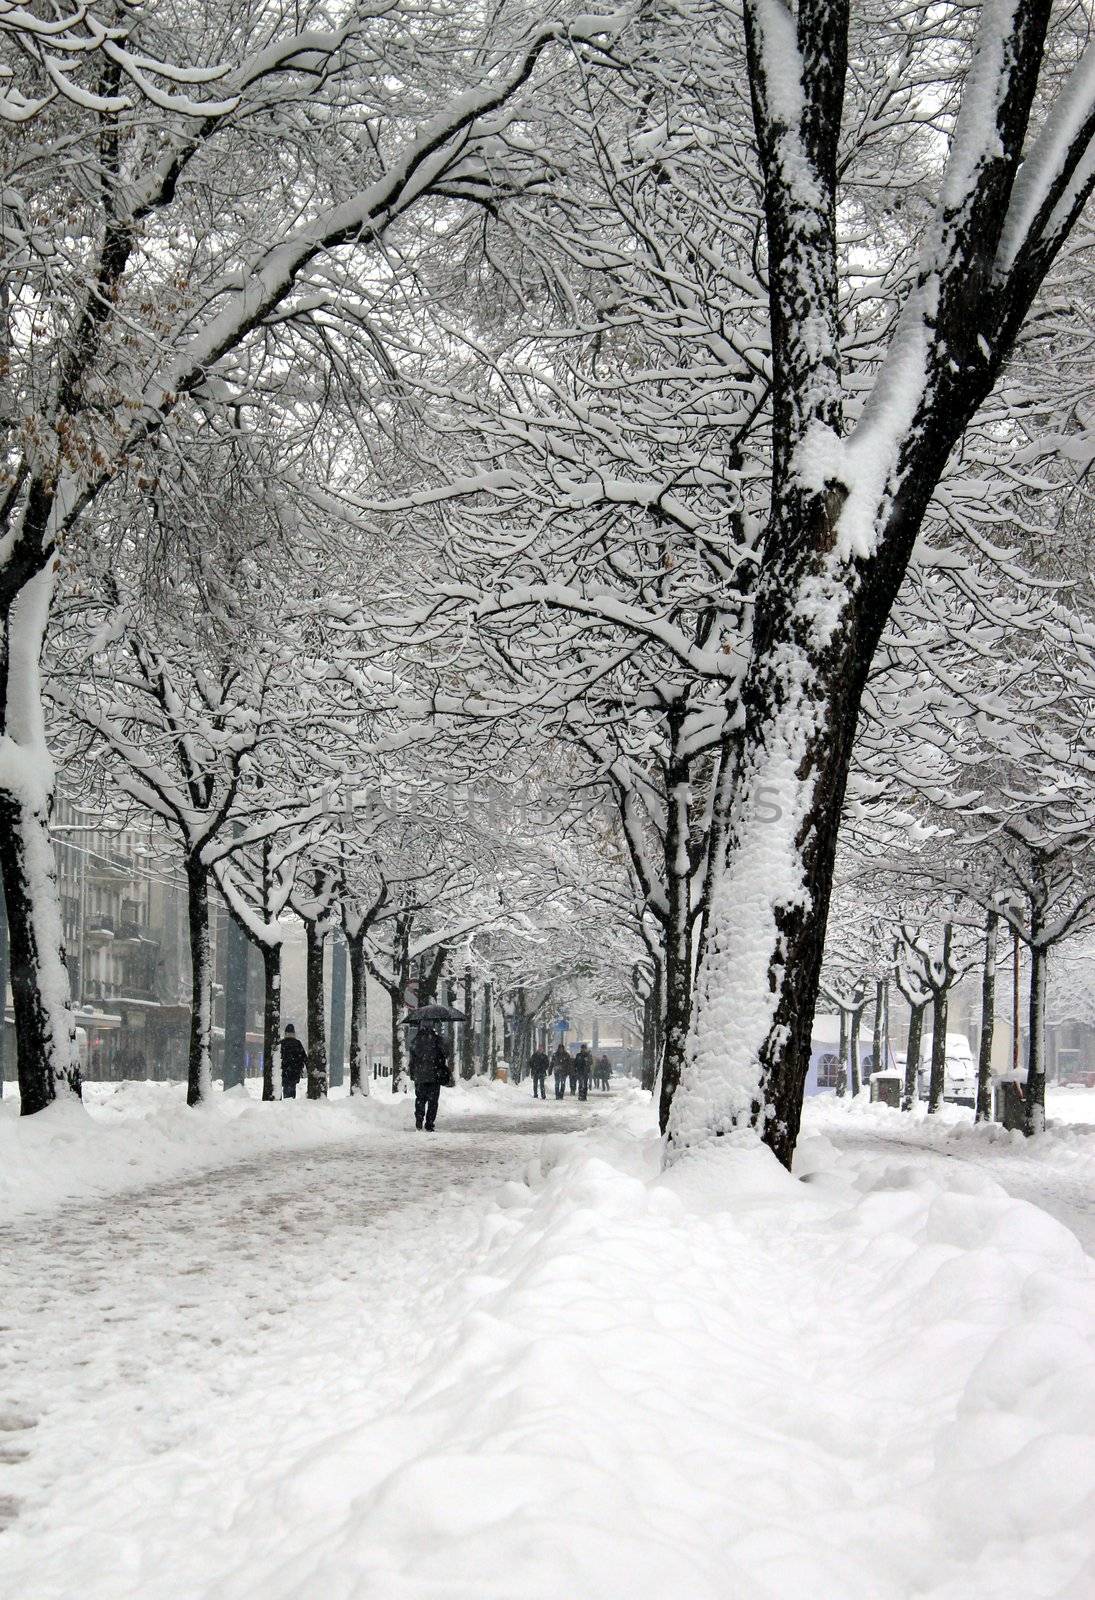 Walkers in Plainpalais place by winter, Geneva, Switzerland by Elenaphotos21